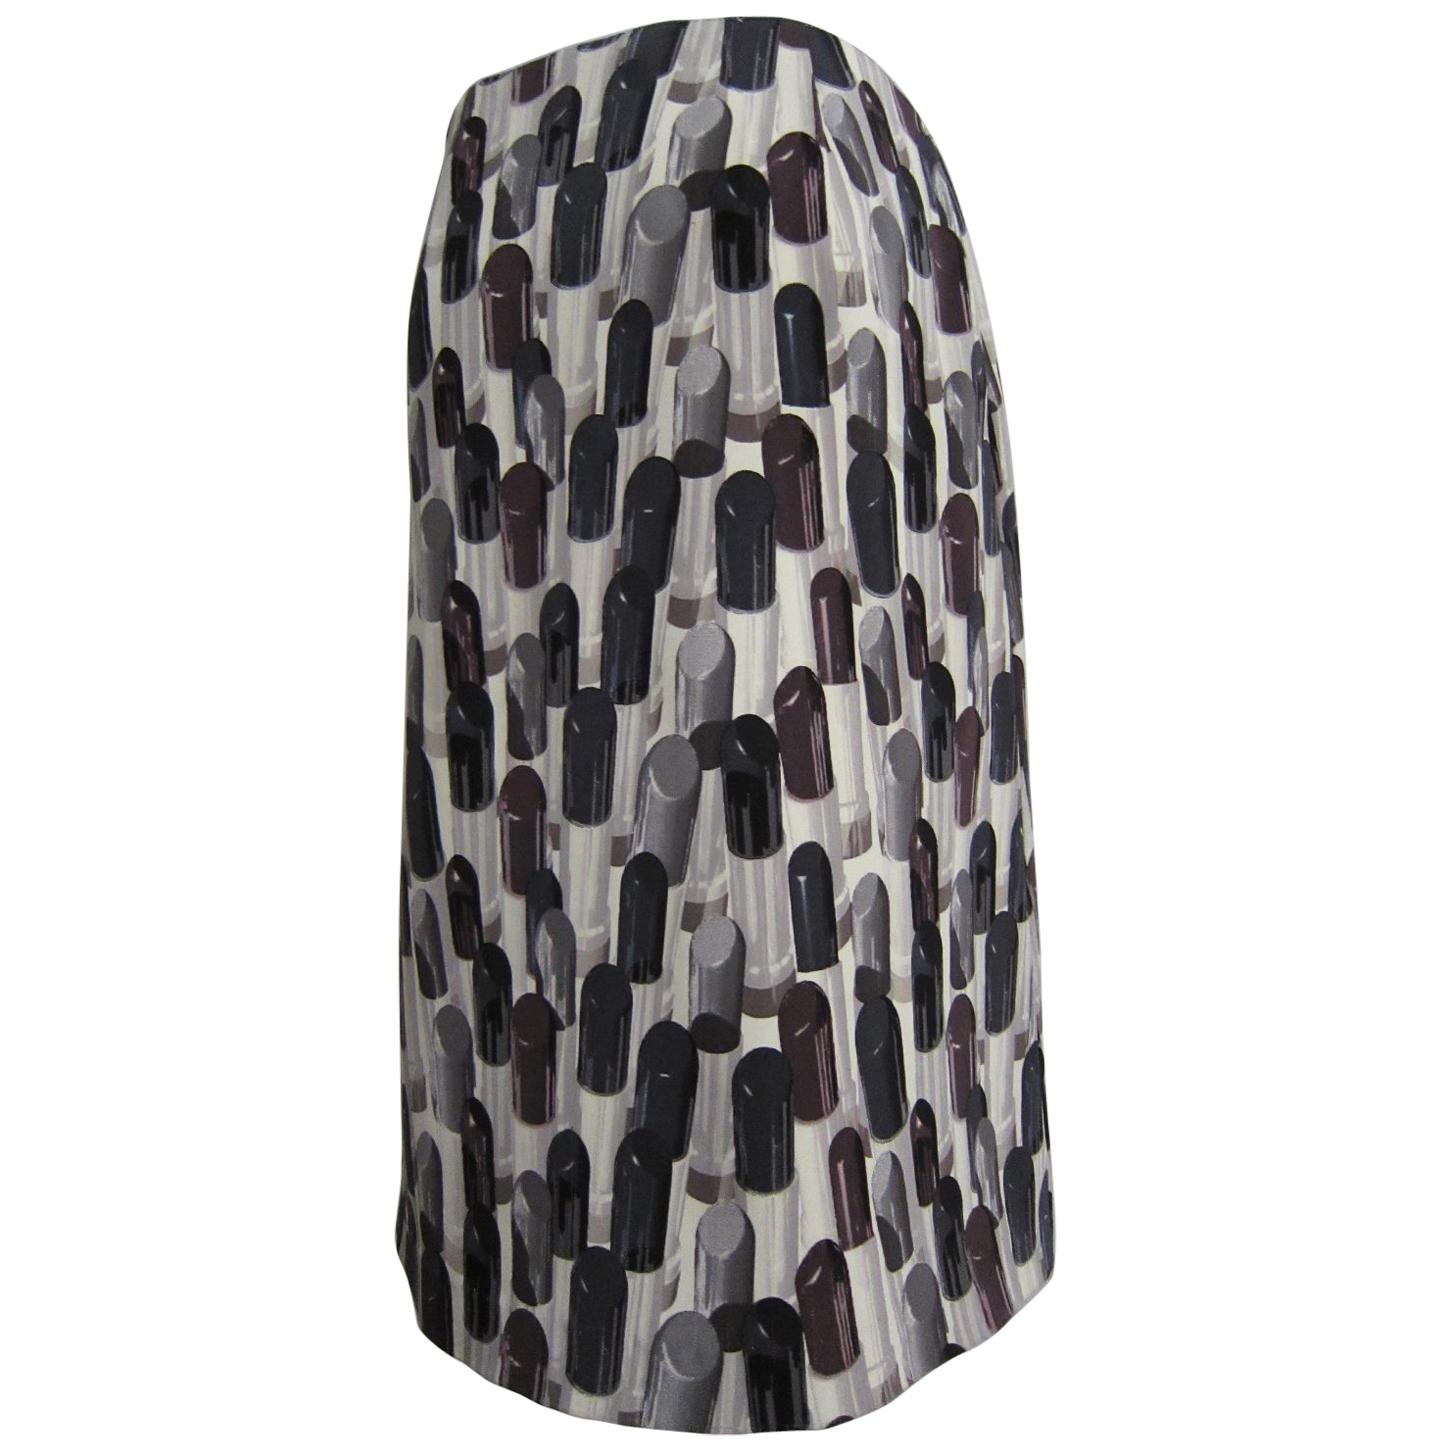 Prada Lipstick Print Skirt Black Grey SS2000